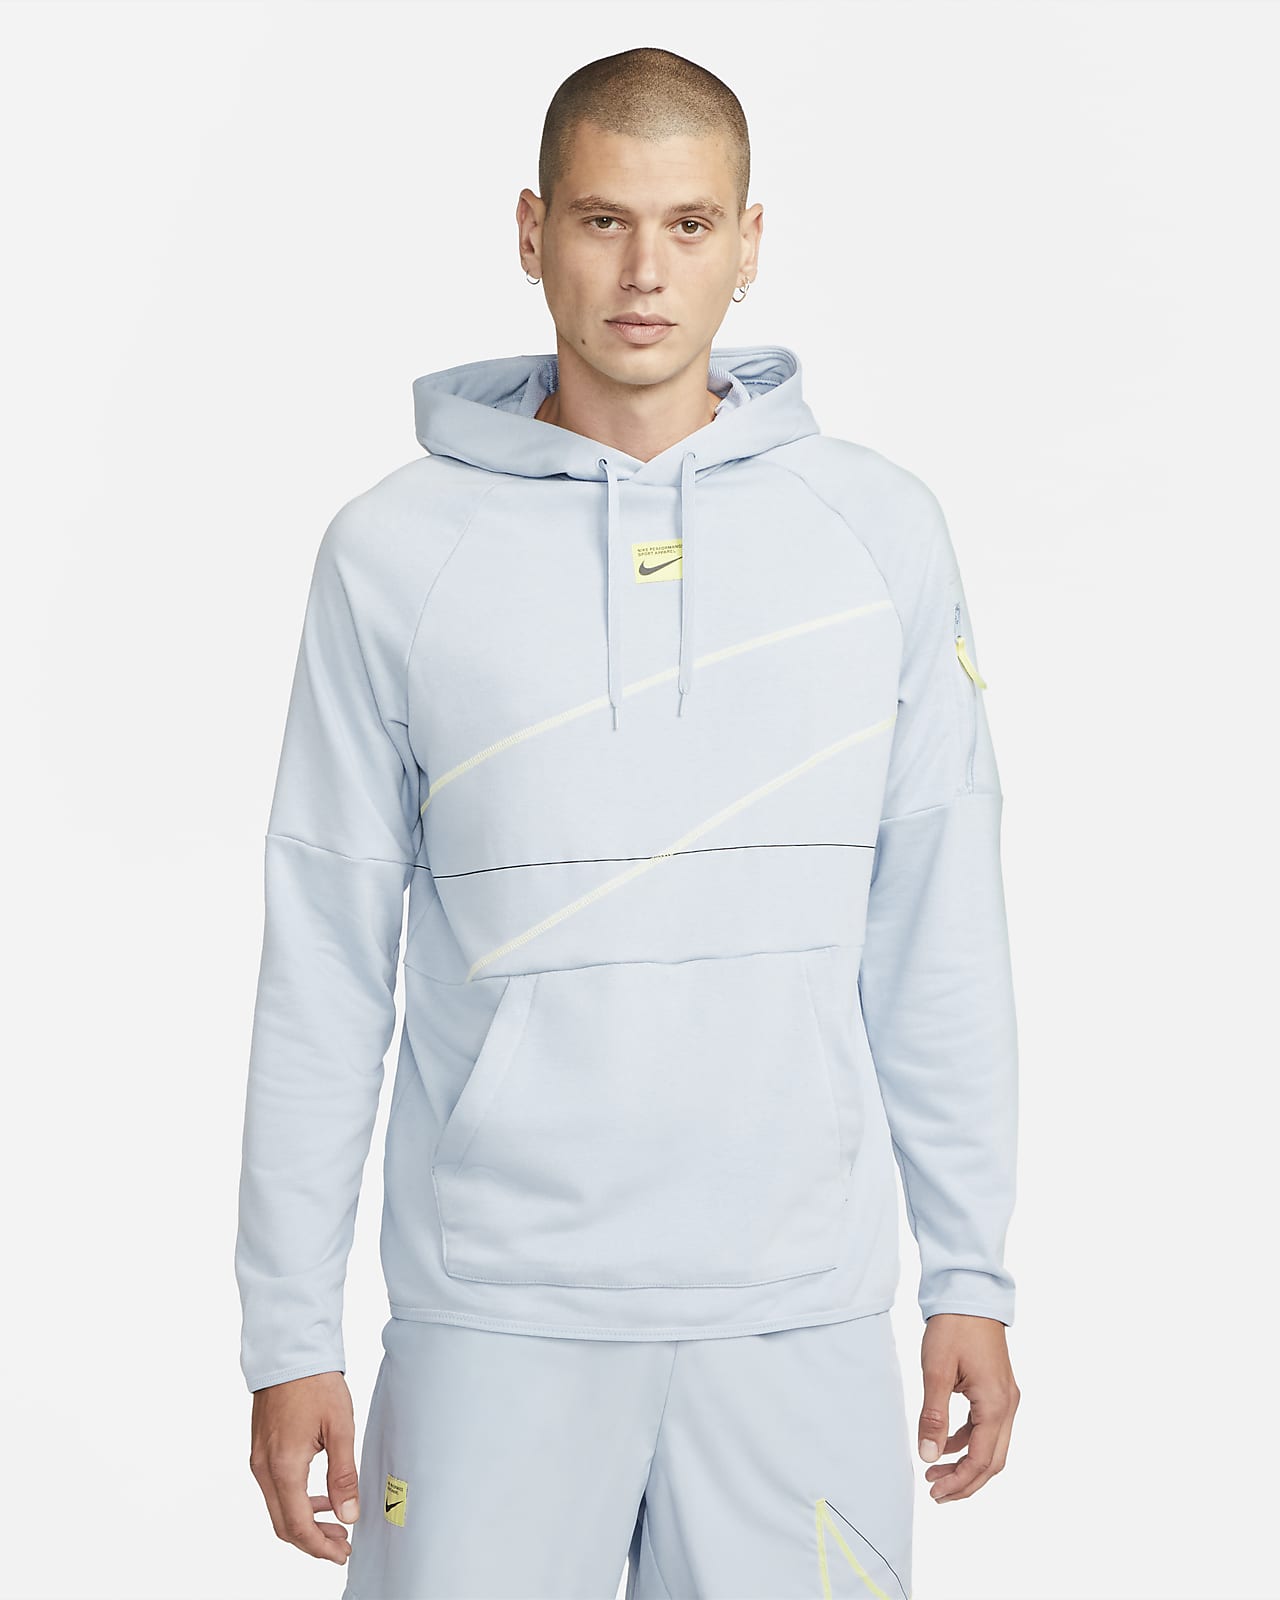 Nike Dri-FIT Men\'s Pullover Hoodie. Fitness Fleece